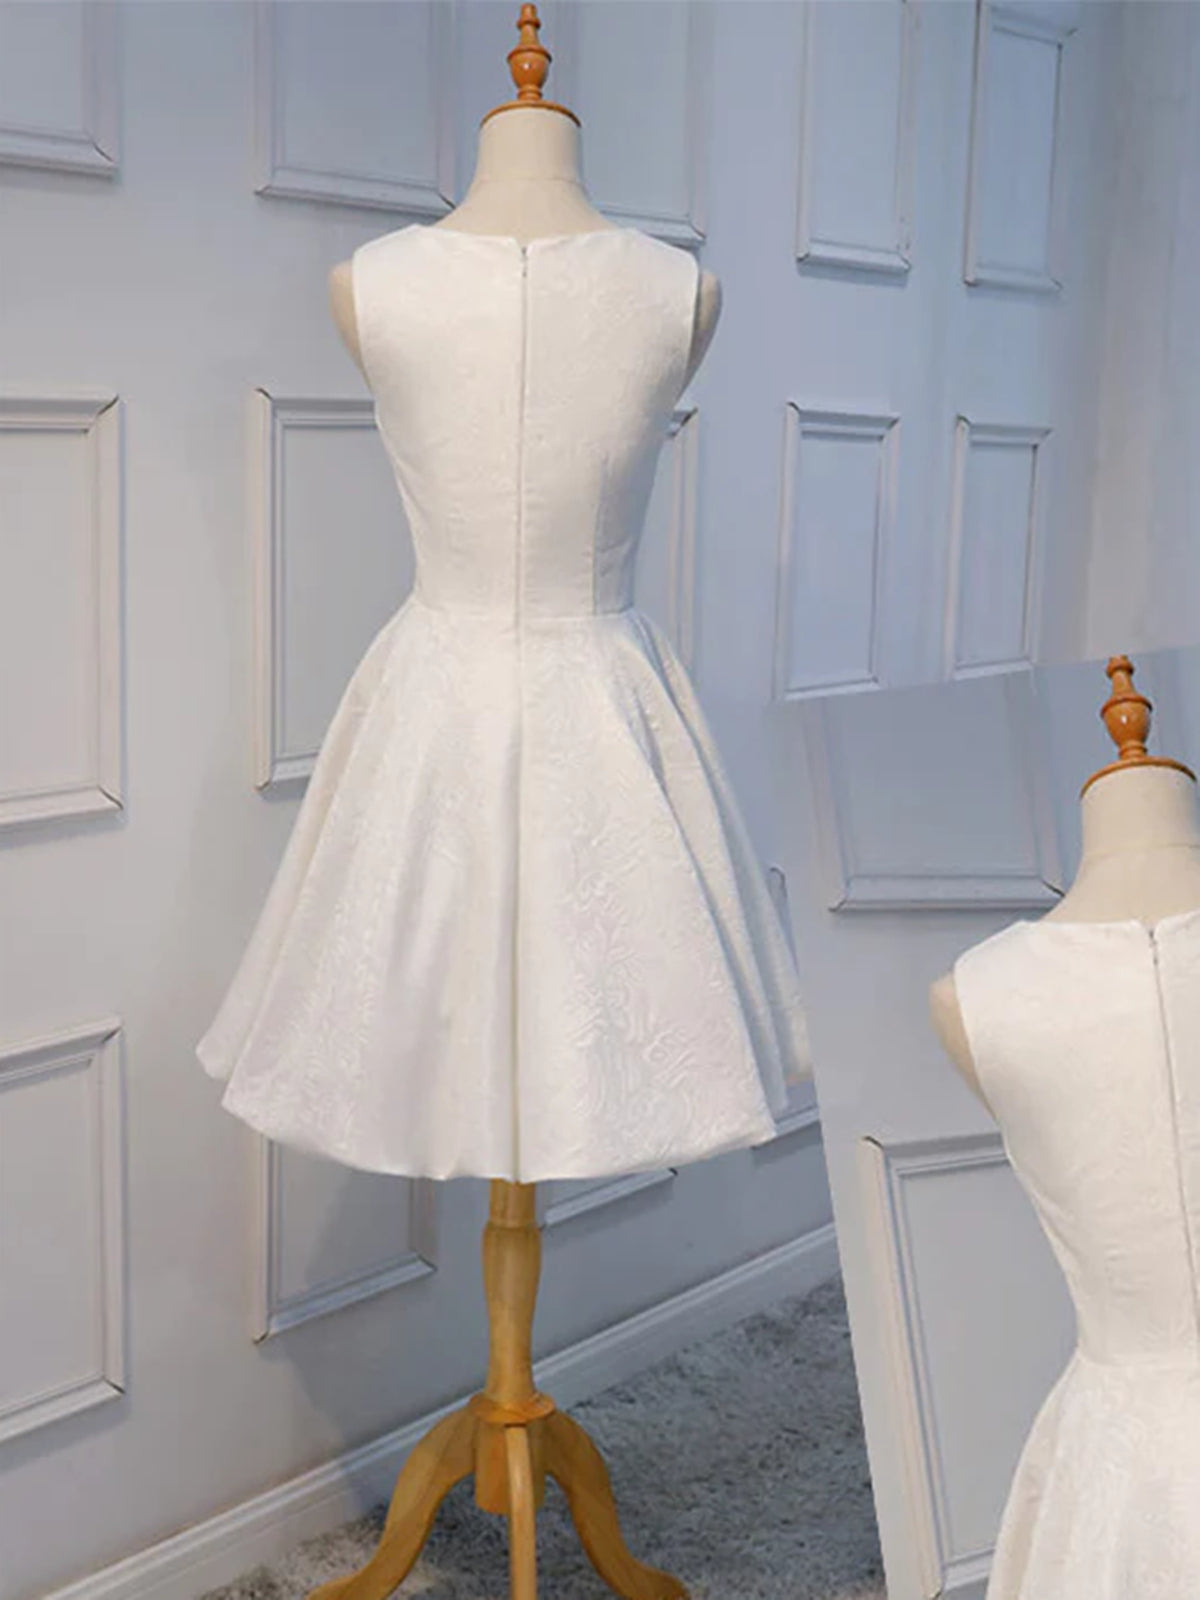 Rustic Wedding Dress, Short White Lace Floral Prom Dresses, Short White Lace Floral Formal Homecoming Dresses